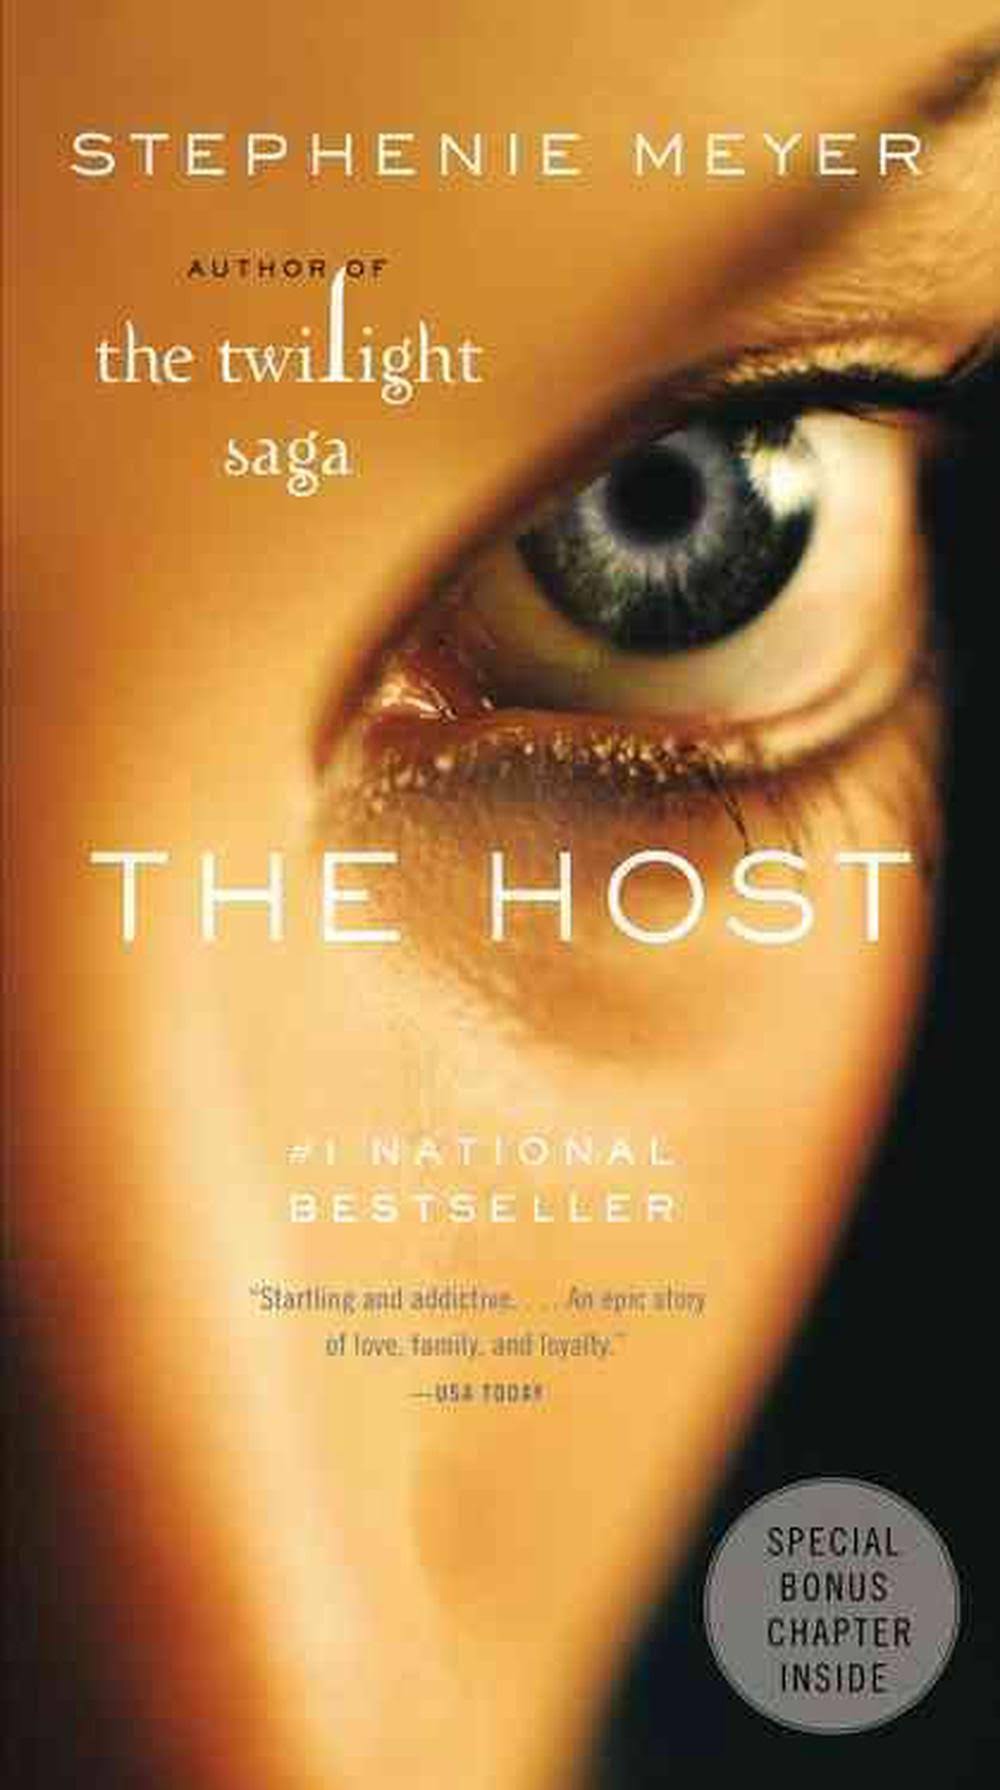 The Host: A Novel - Stephenie Meyer